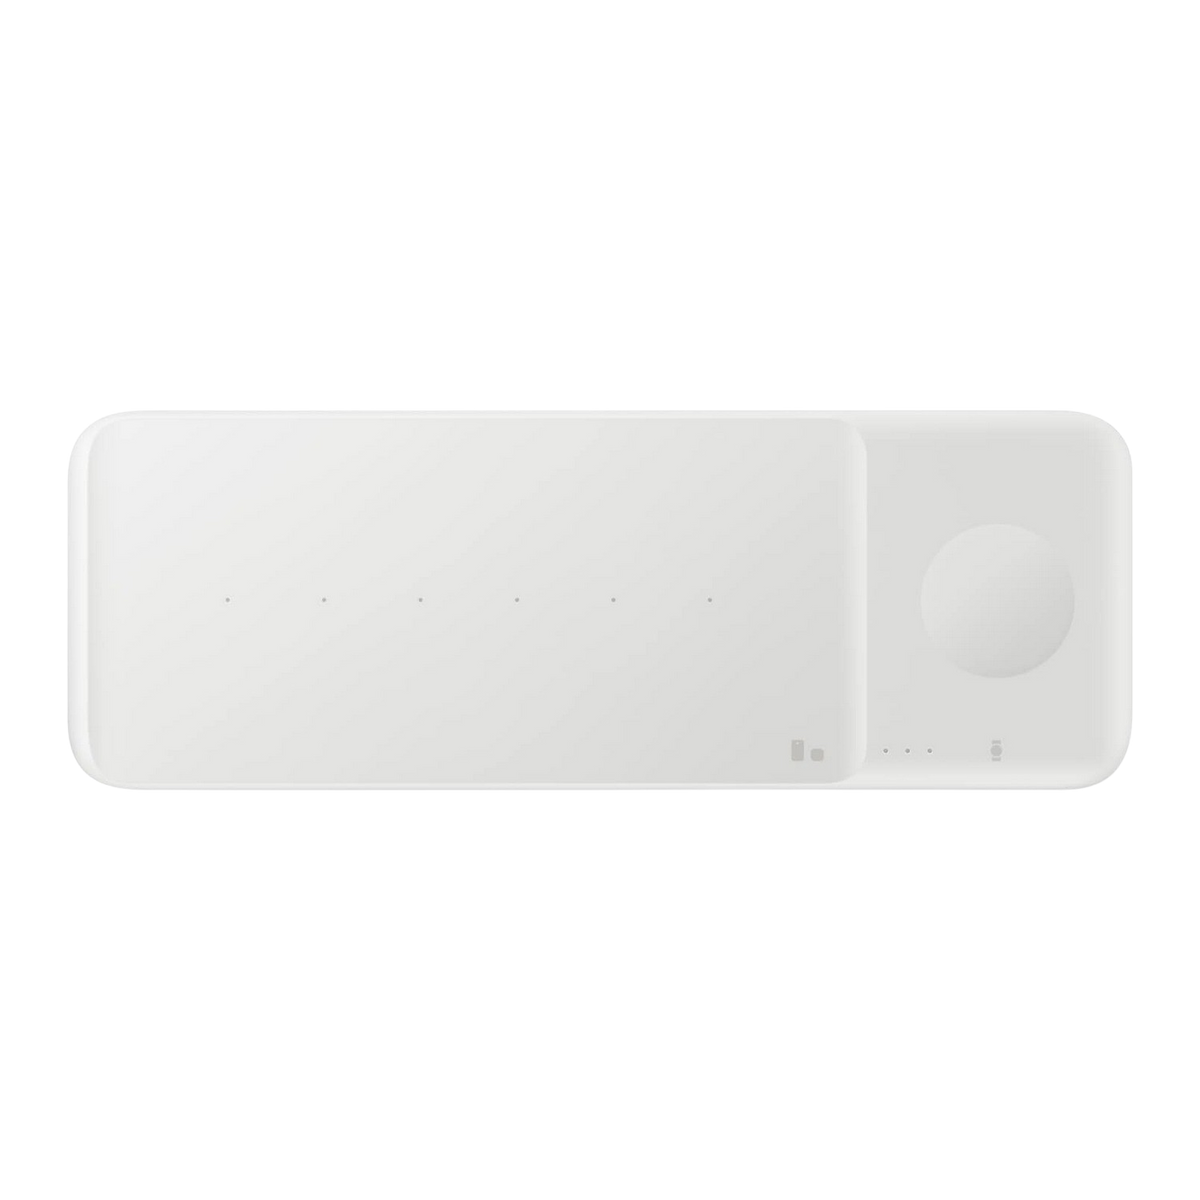 SAMSUNG Wireless Ladegerät Trio Ladegeräte Apple, Pad & Weiß Kabel - Weiß